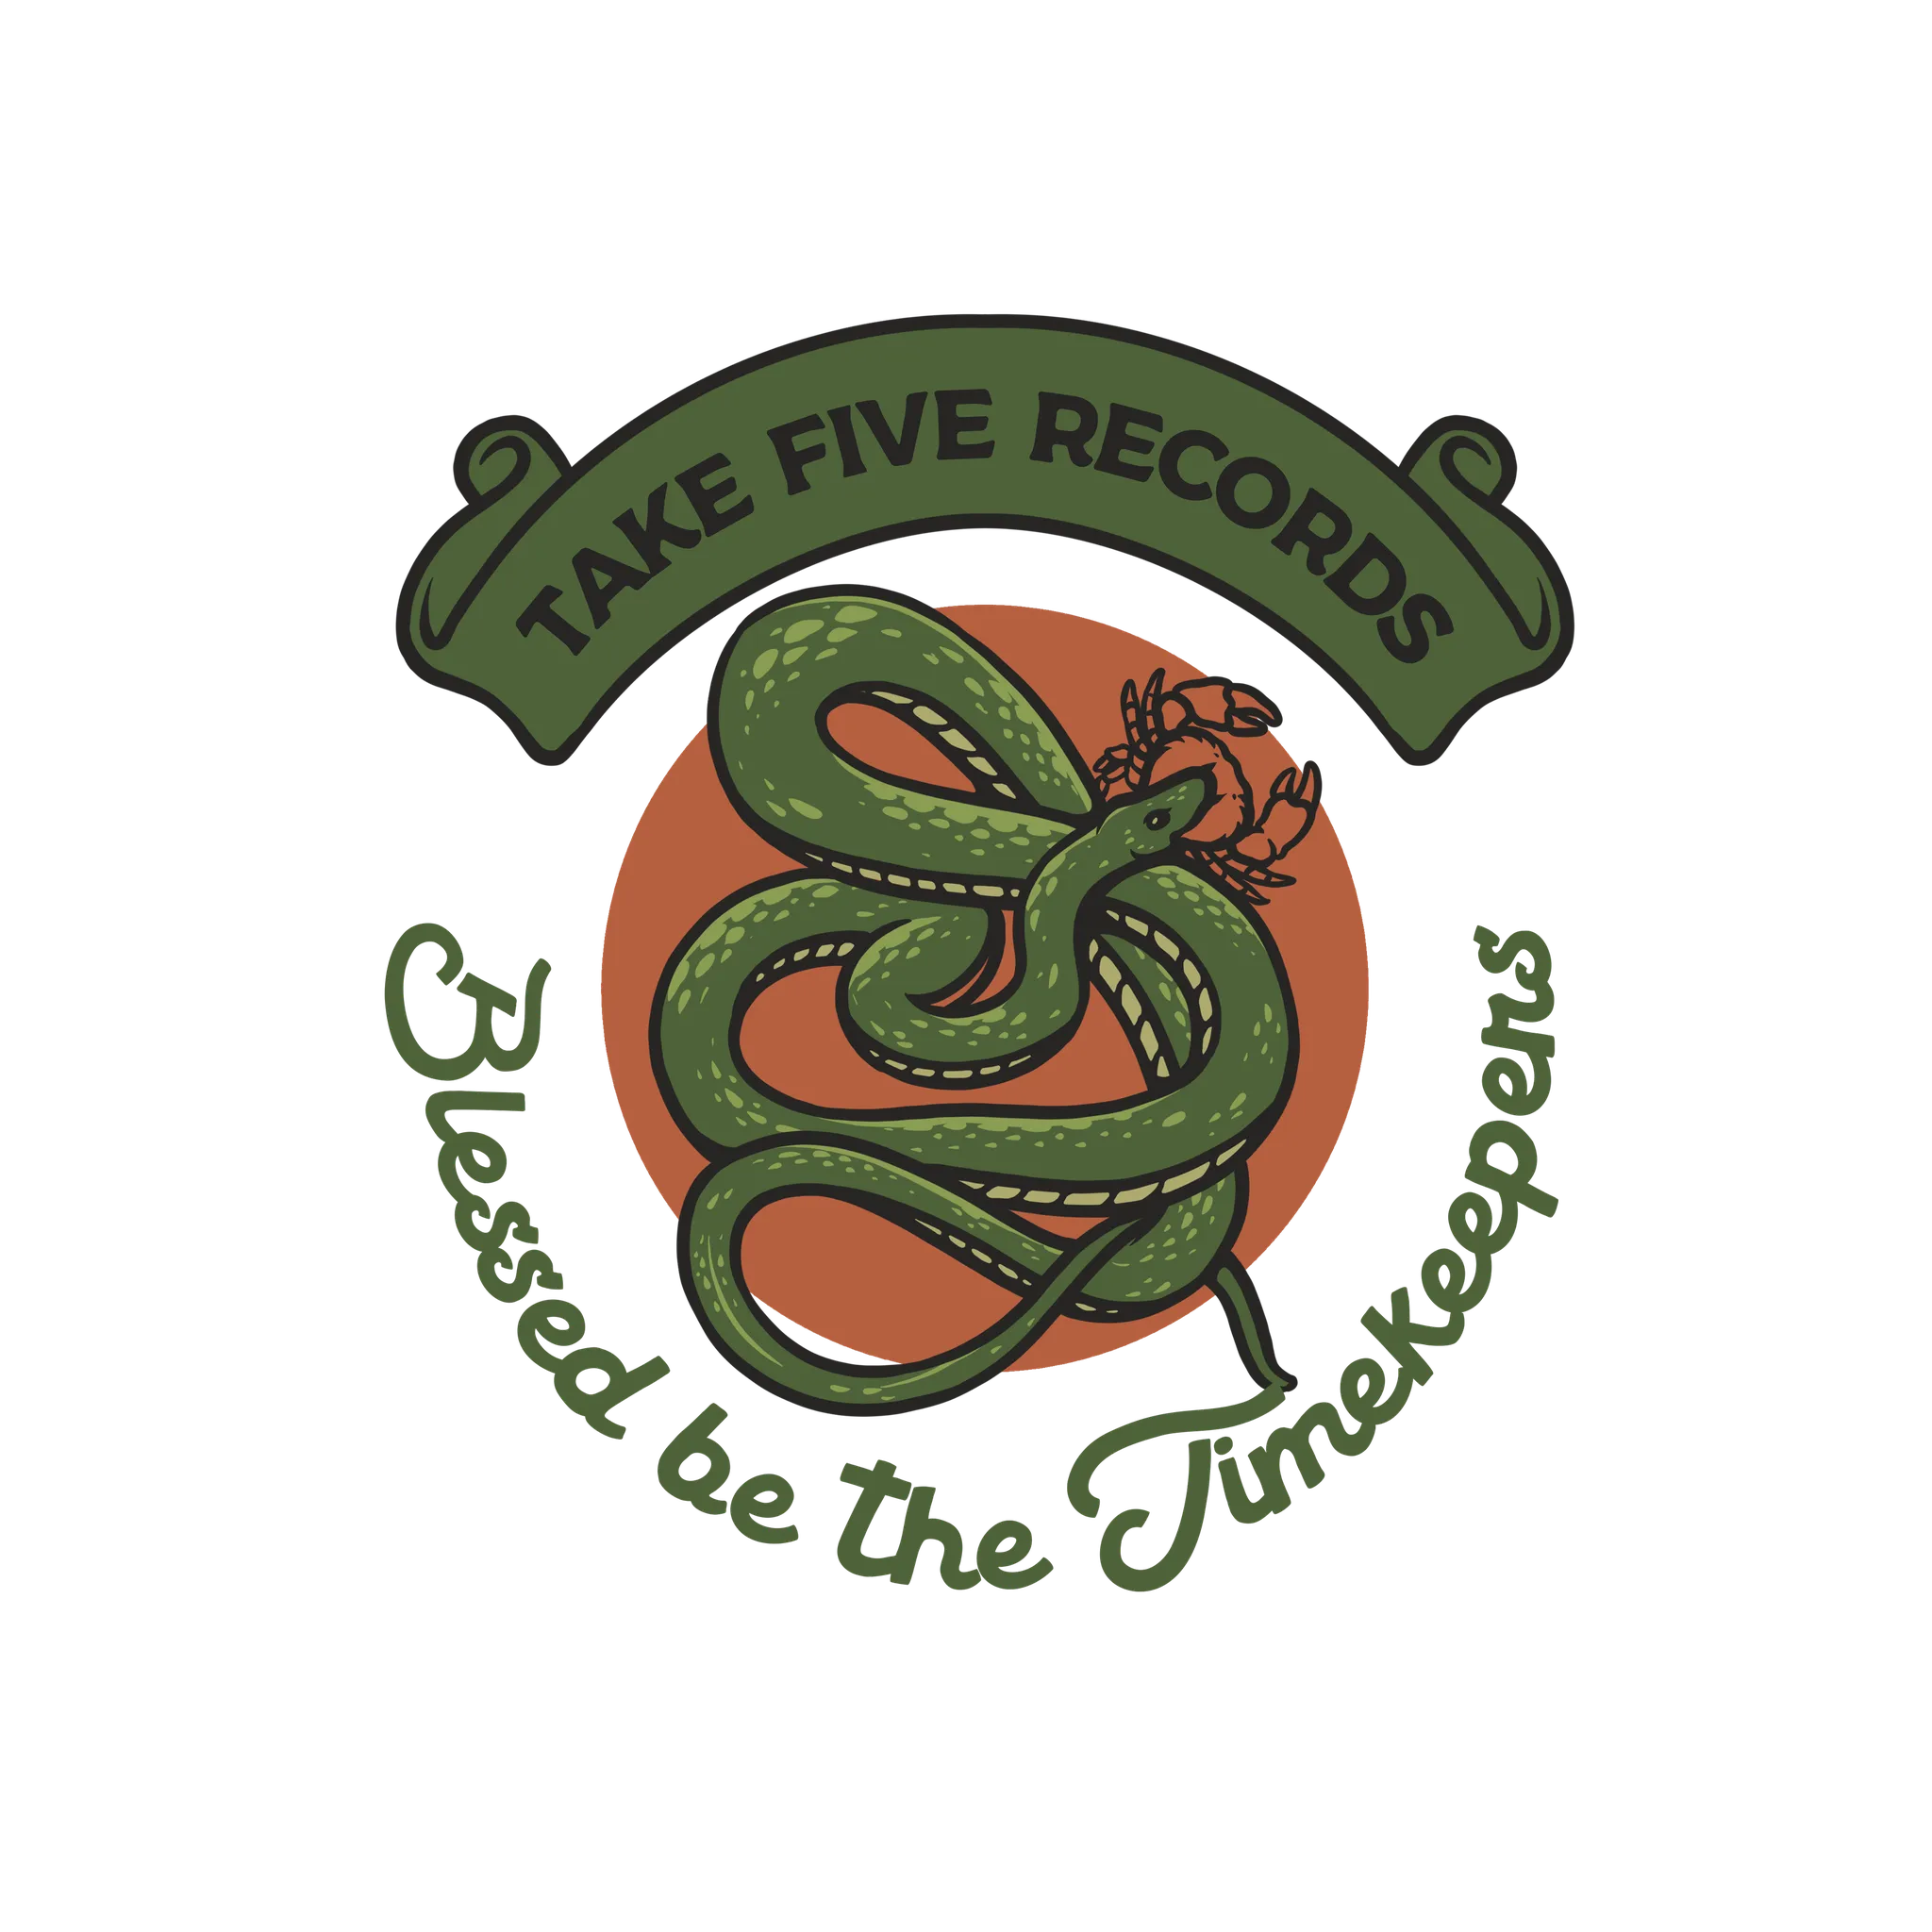 Take Five Records